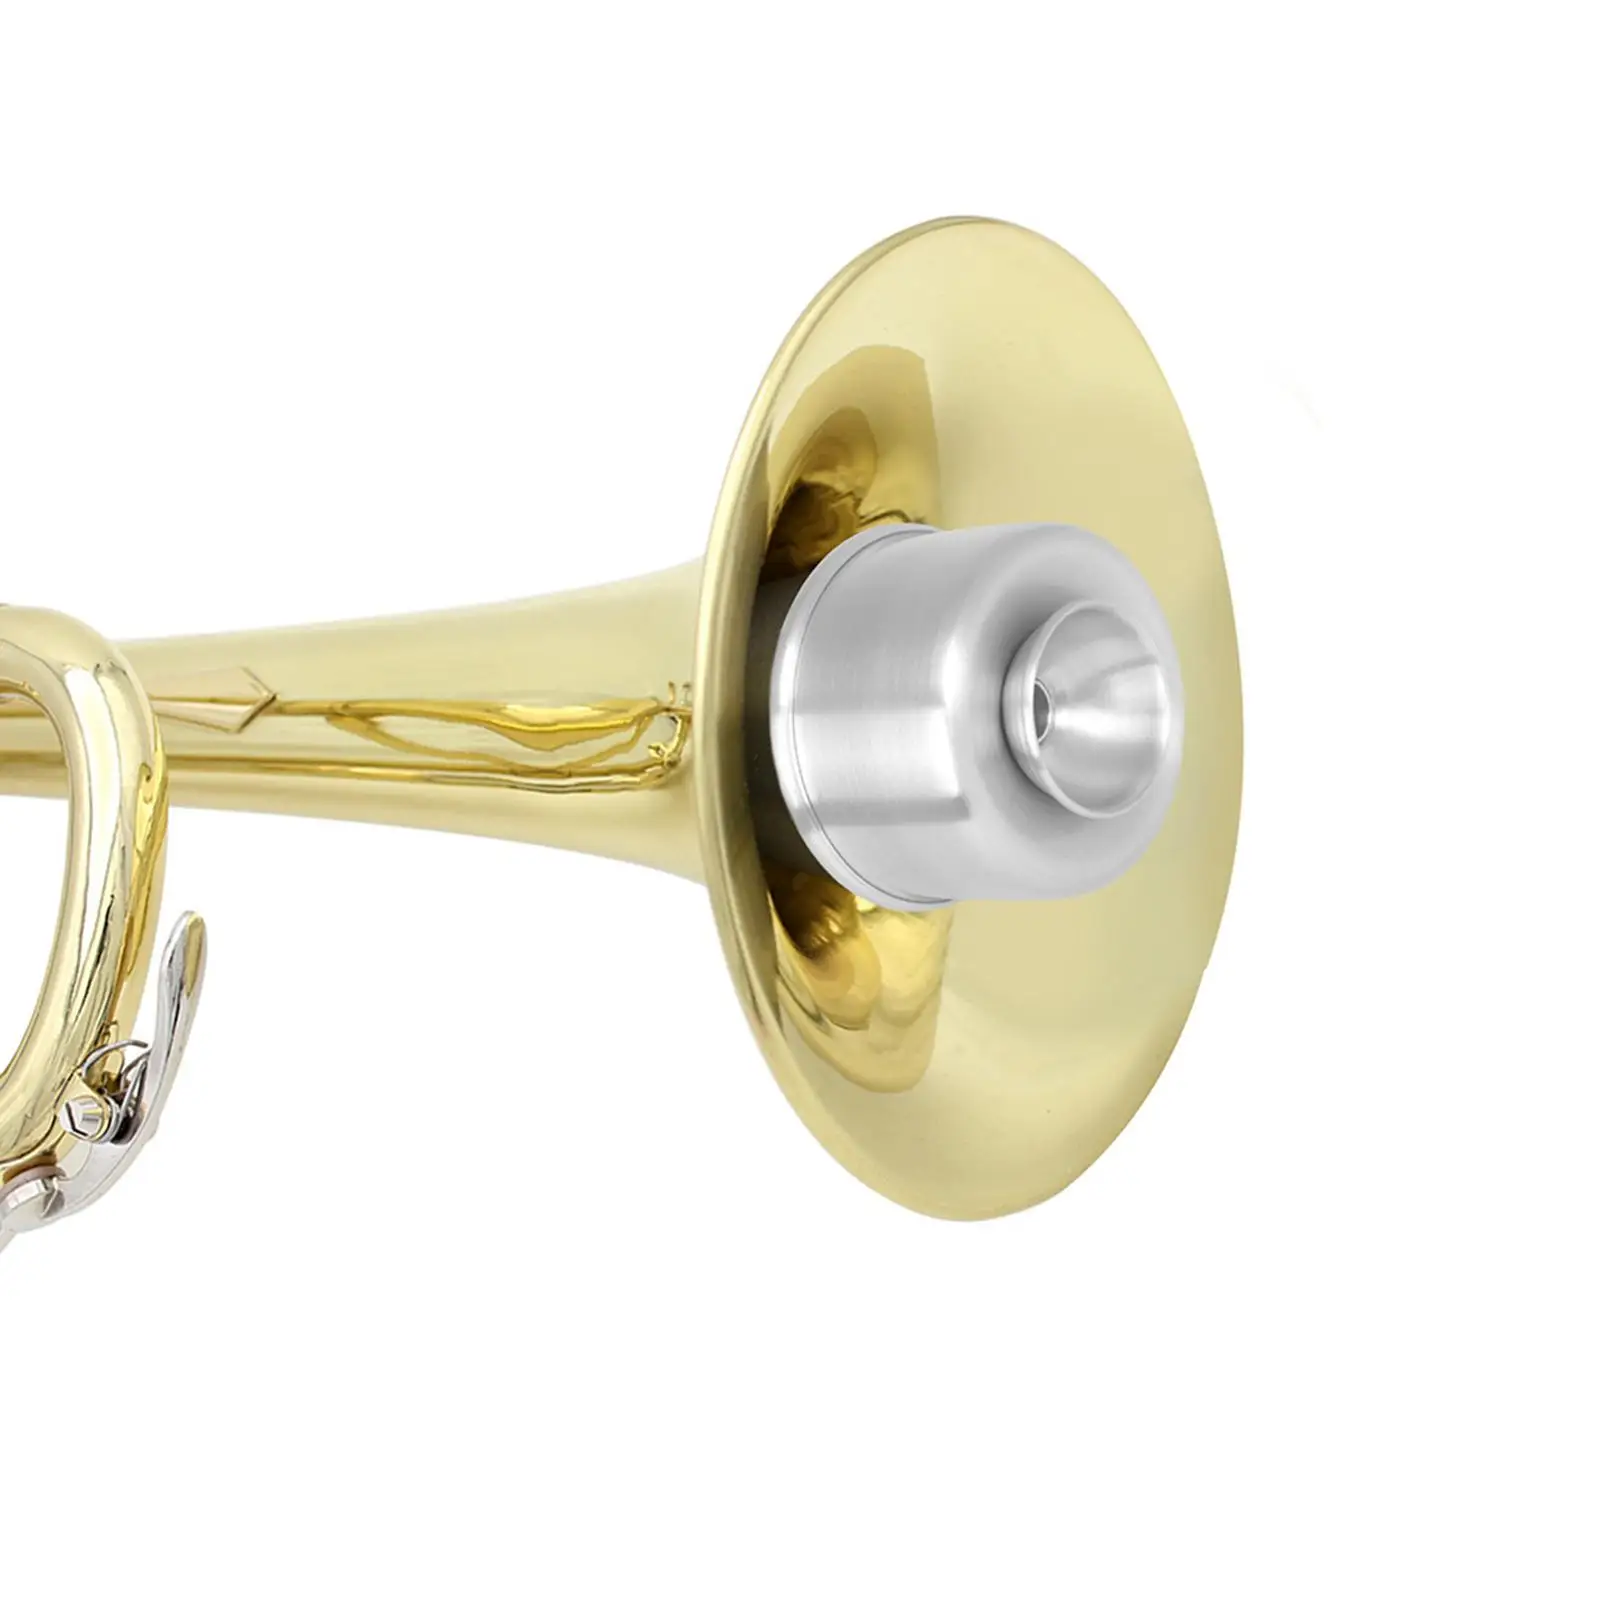 Wah Mute Trumpet Wah Mute Rhythm Trumpet Mute Wah Mute for Trumpet for Jazz All Kinds of Trumpets Music Lovers